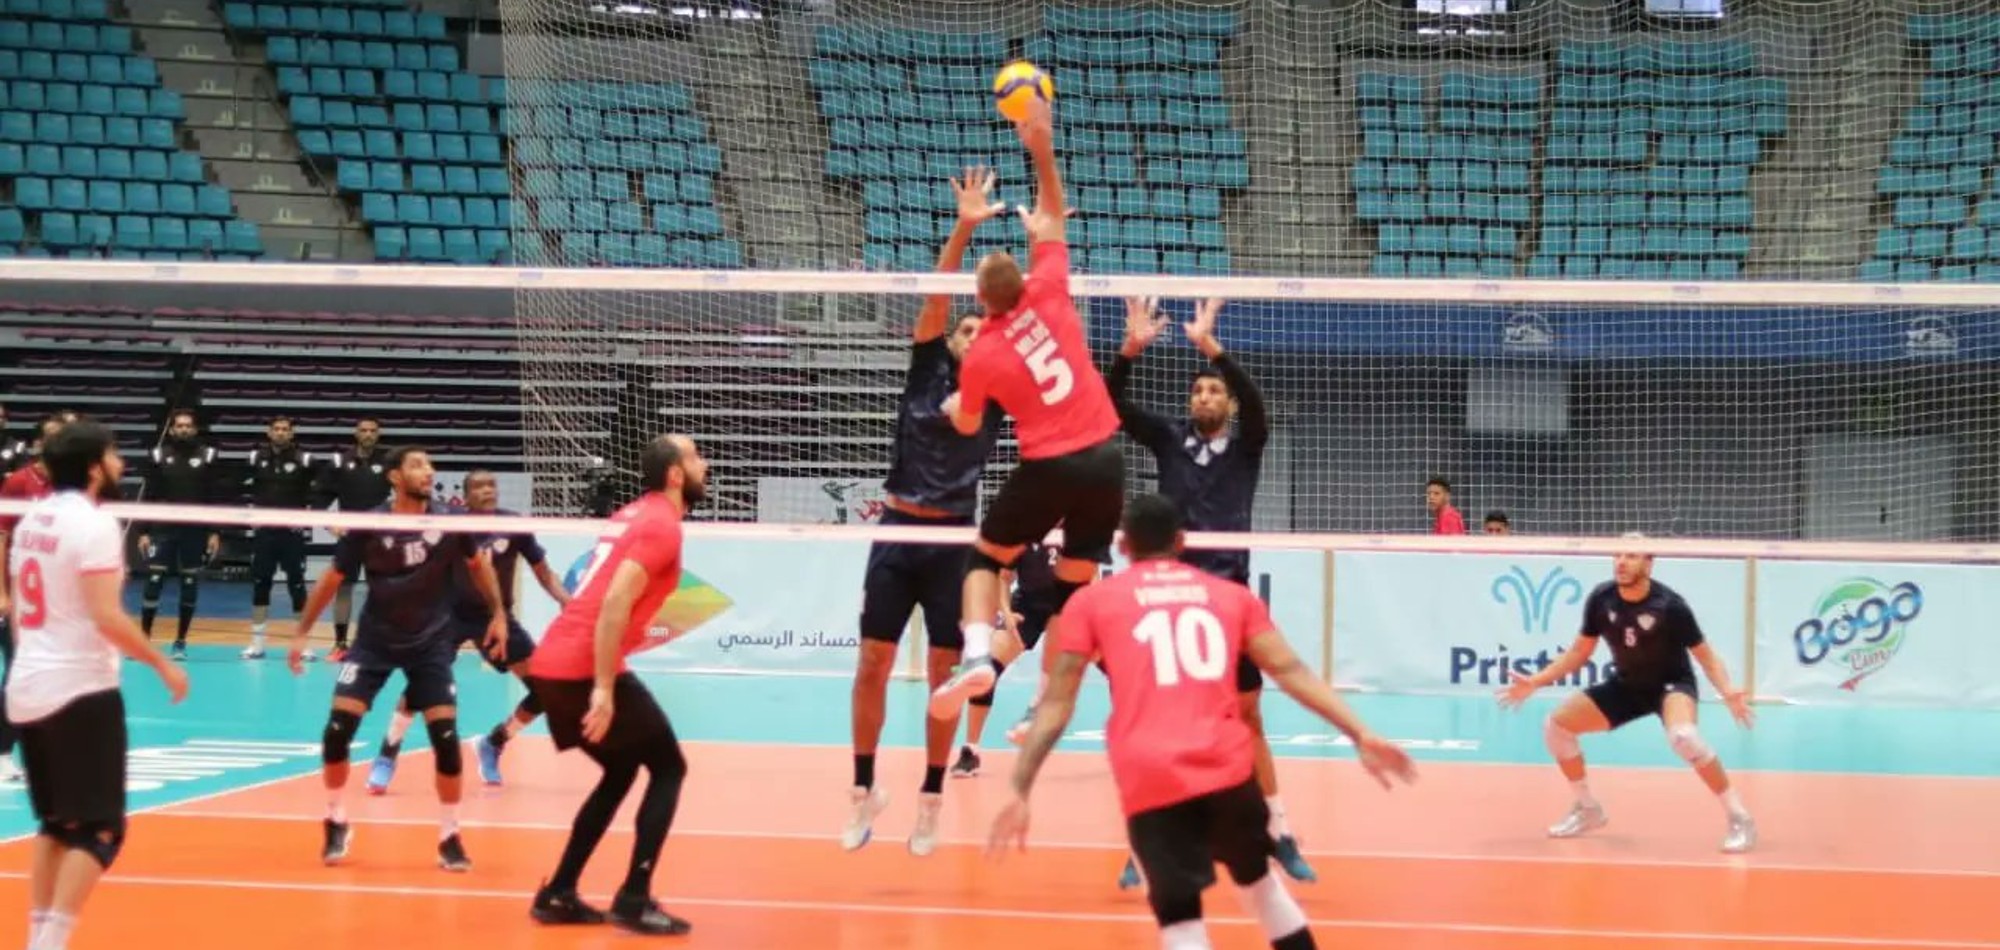 Al-Rayyan, Al-Ahli to Play in Quarter-Finals of 40th Arab Volleyball Championship